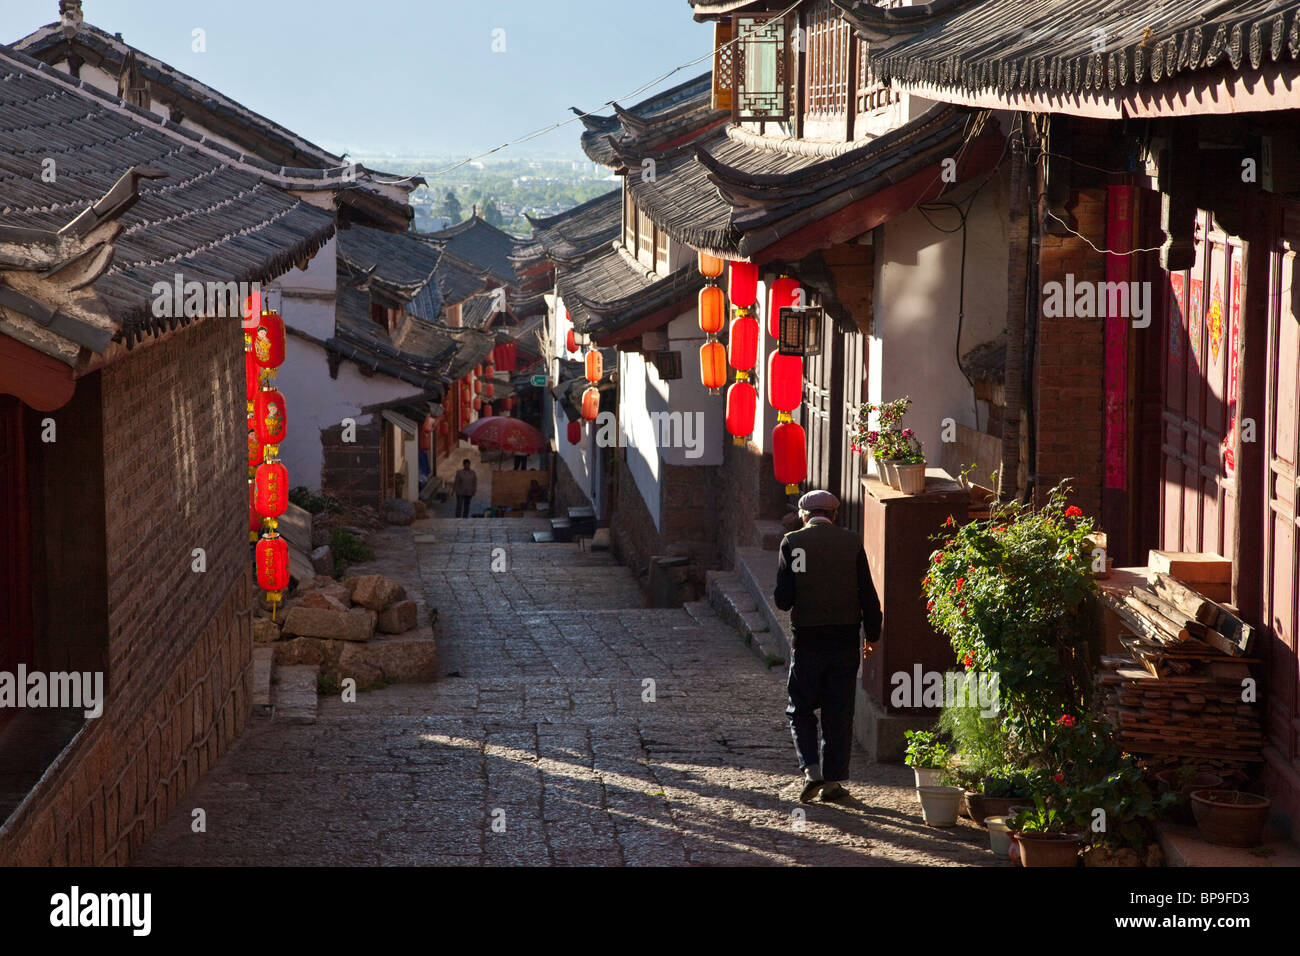 Old town in Lijiang, Yunnan Province, China Stock Photo